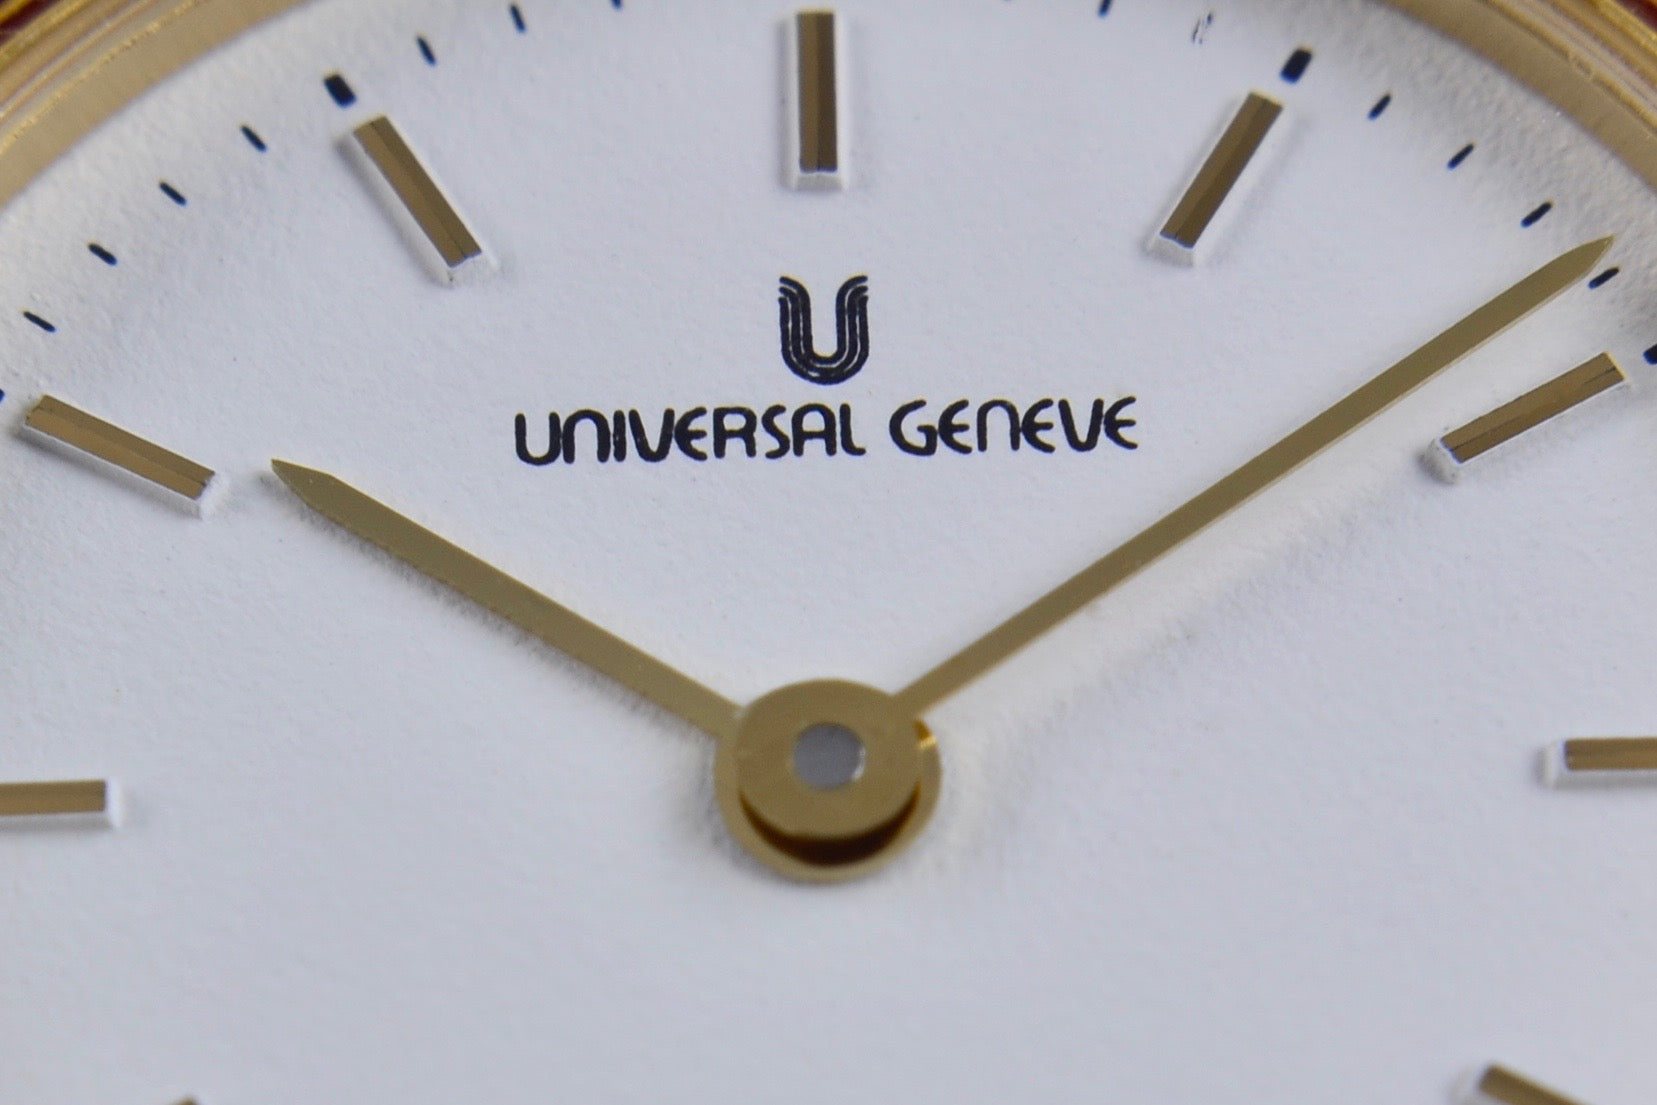 Universal Genève Ladies vers 1990 - LumeVille